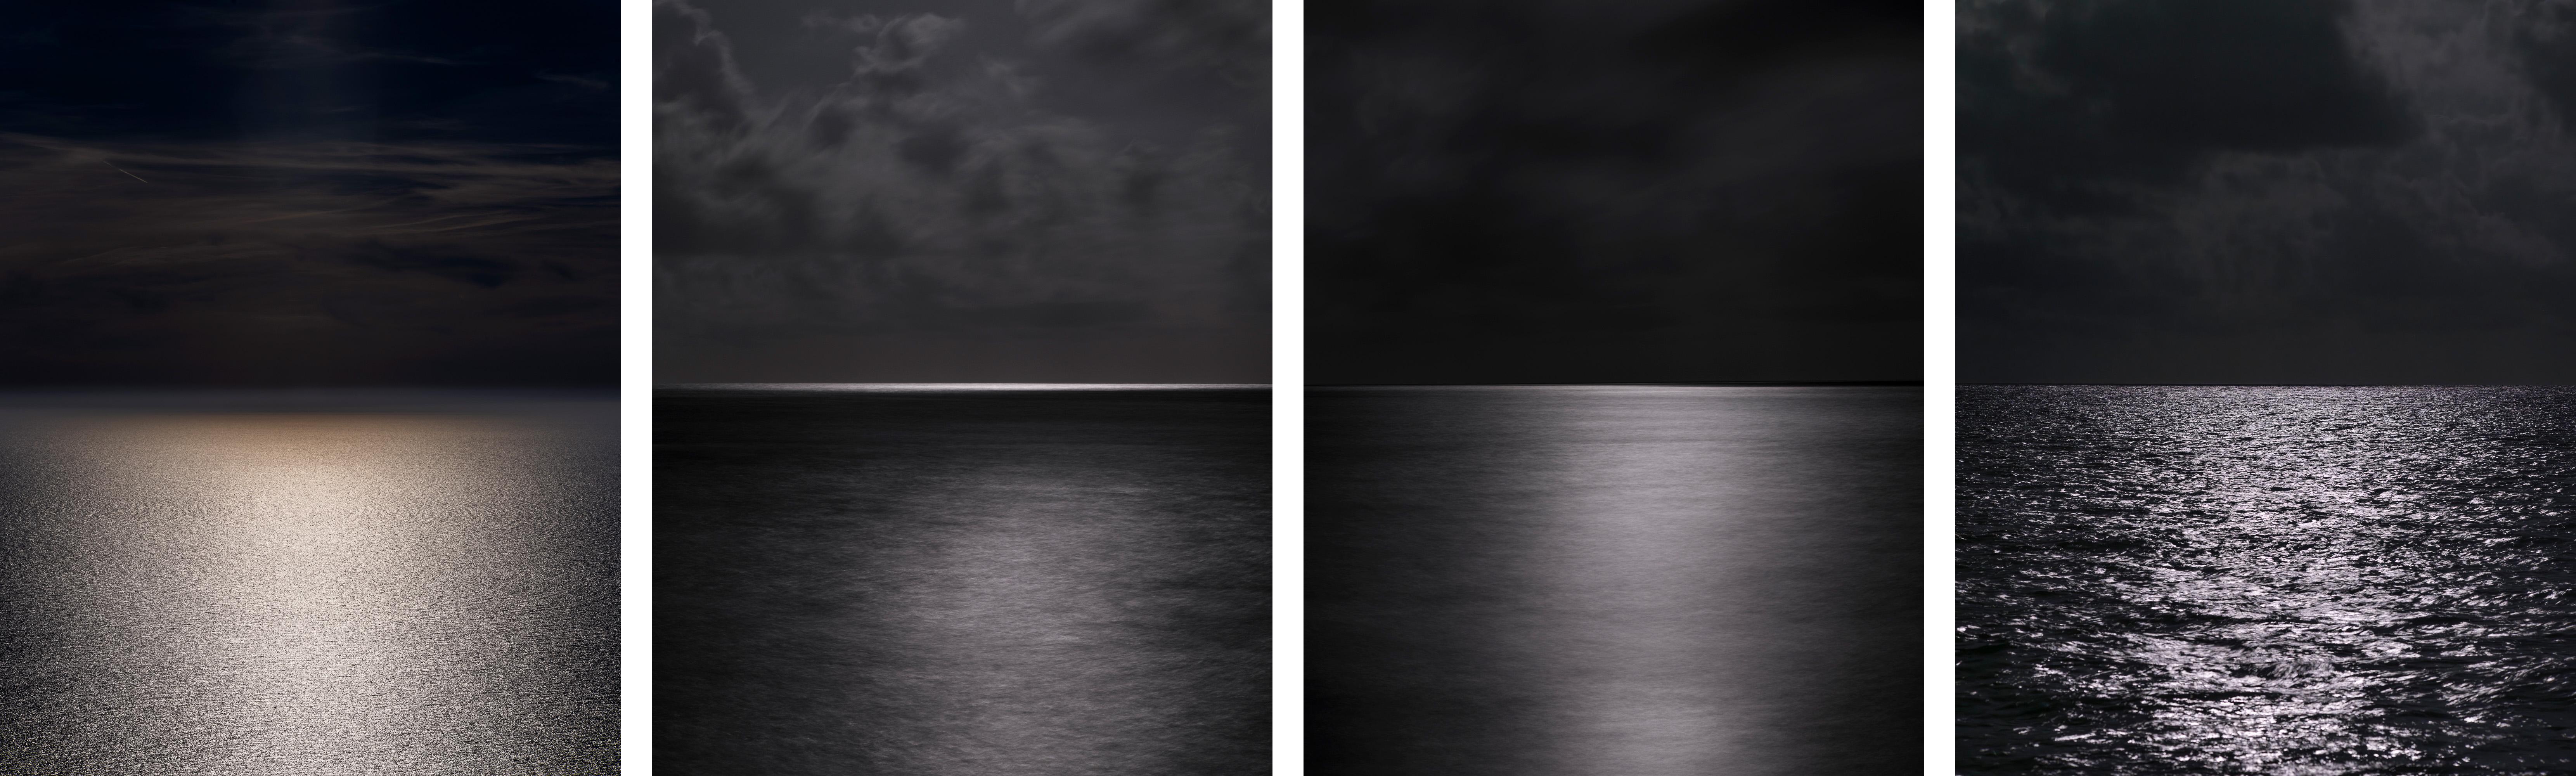 Miguel Winograd  Black and White Photograph – Set Sol de Mallorca, Mondaufgang II, I und IV. Aus der Serie Mares. 